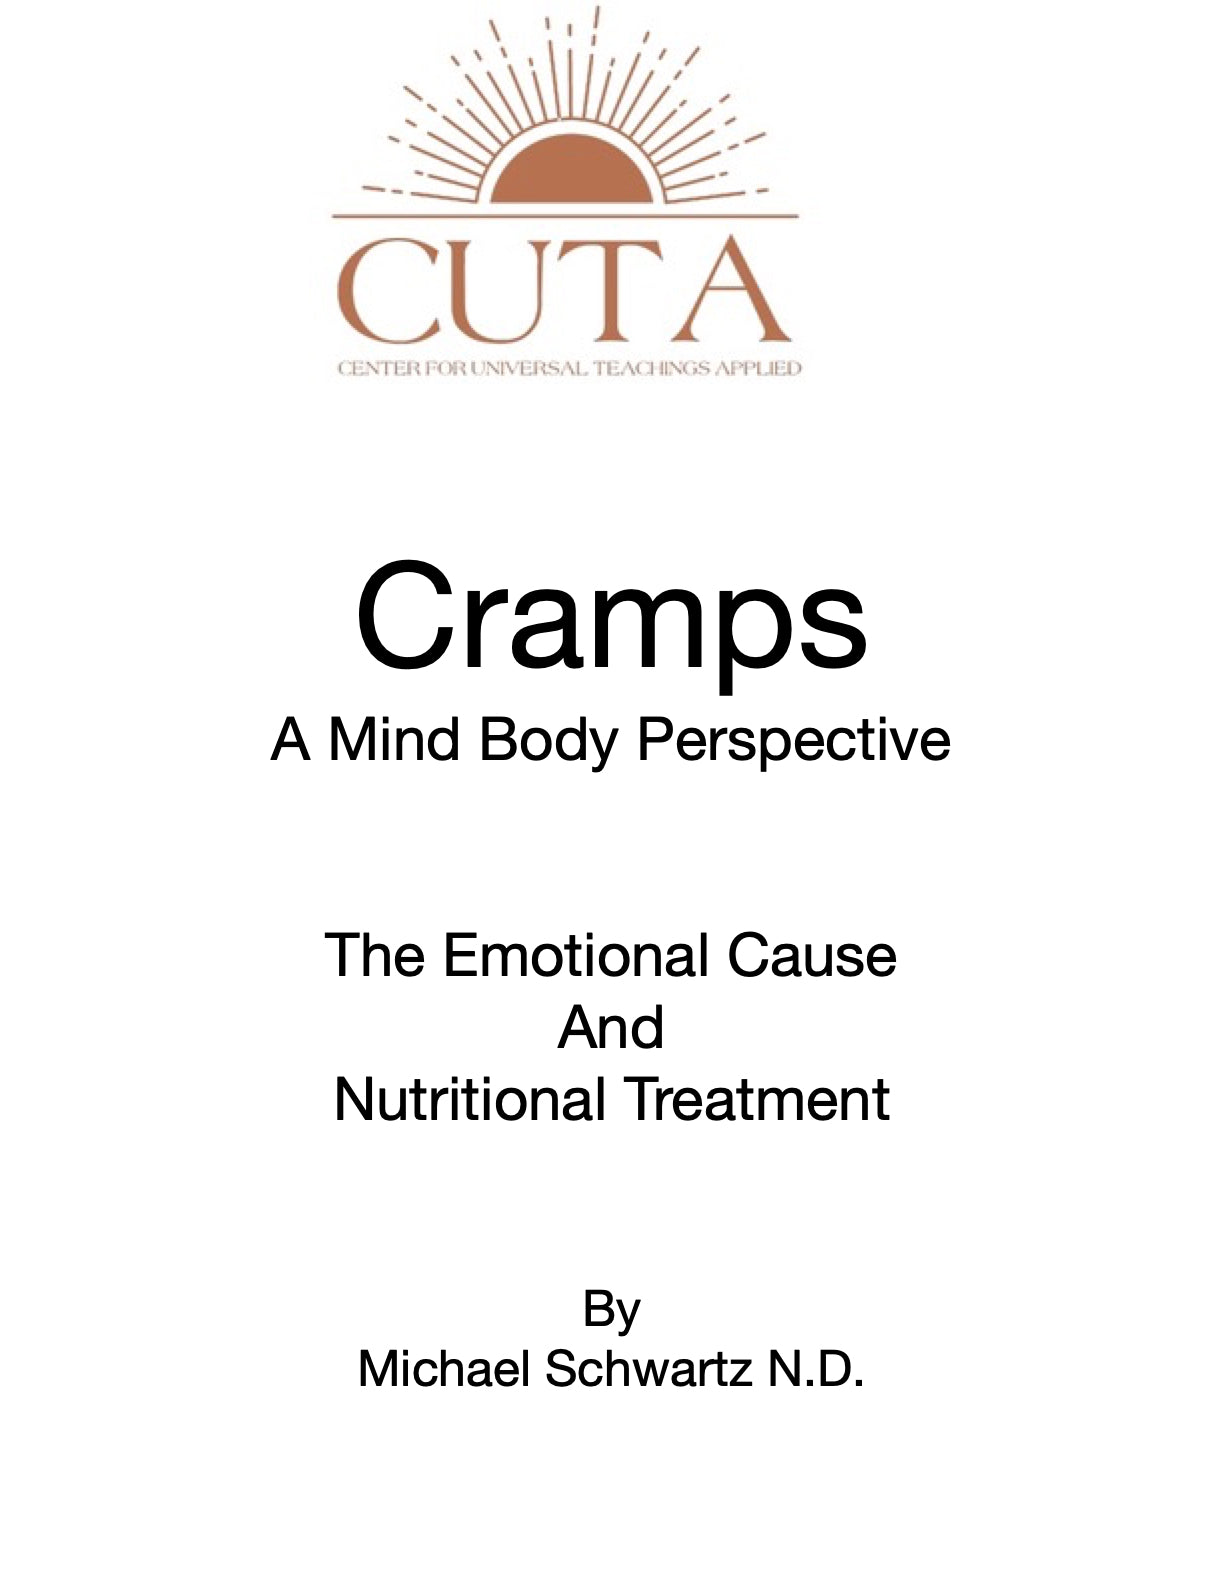 Cramps Booklet